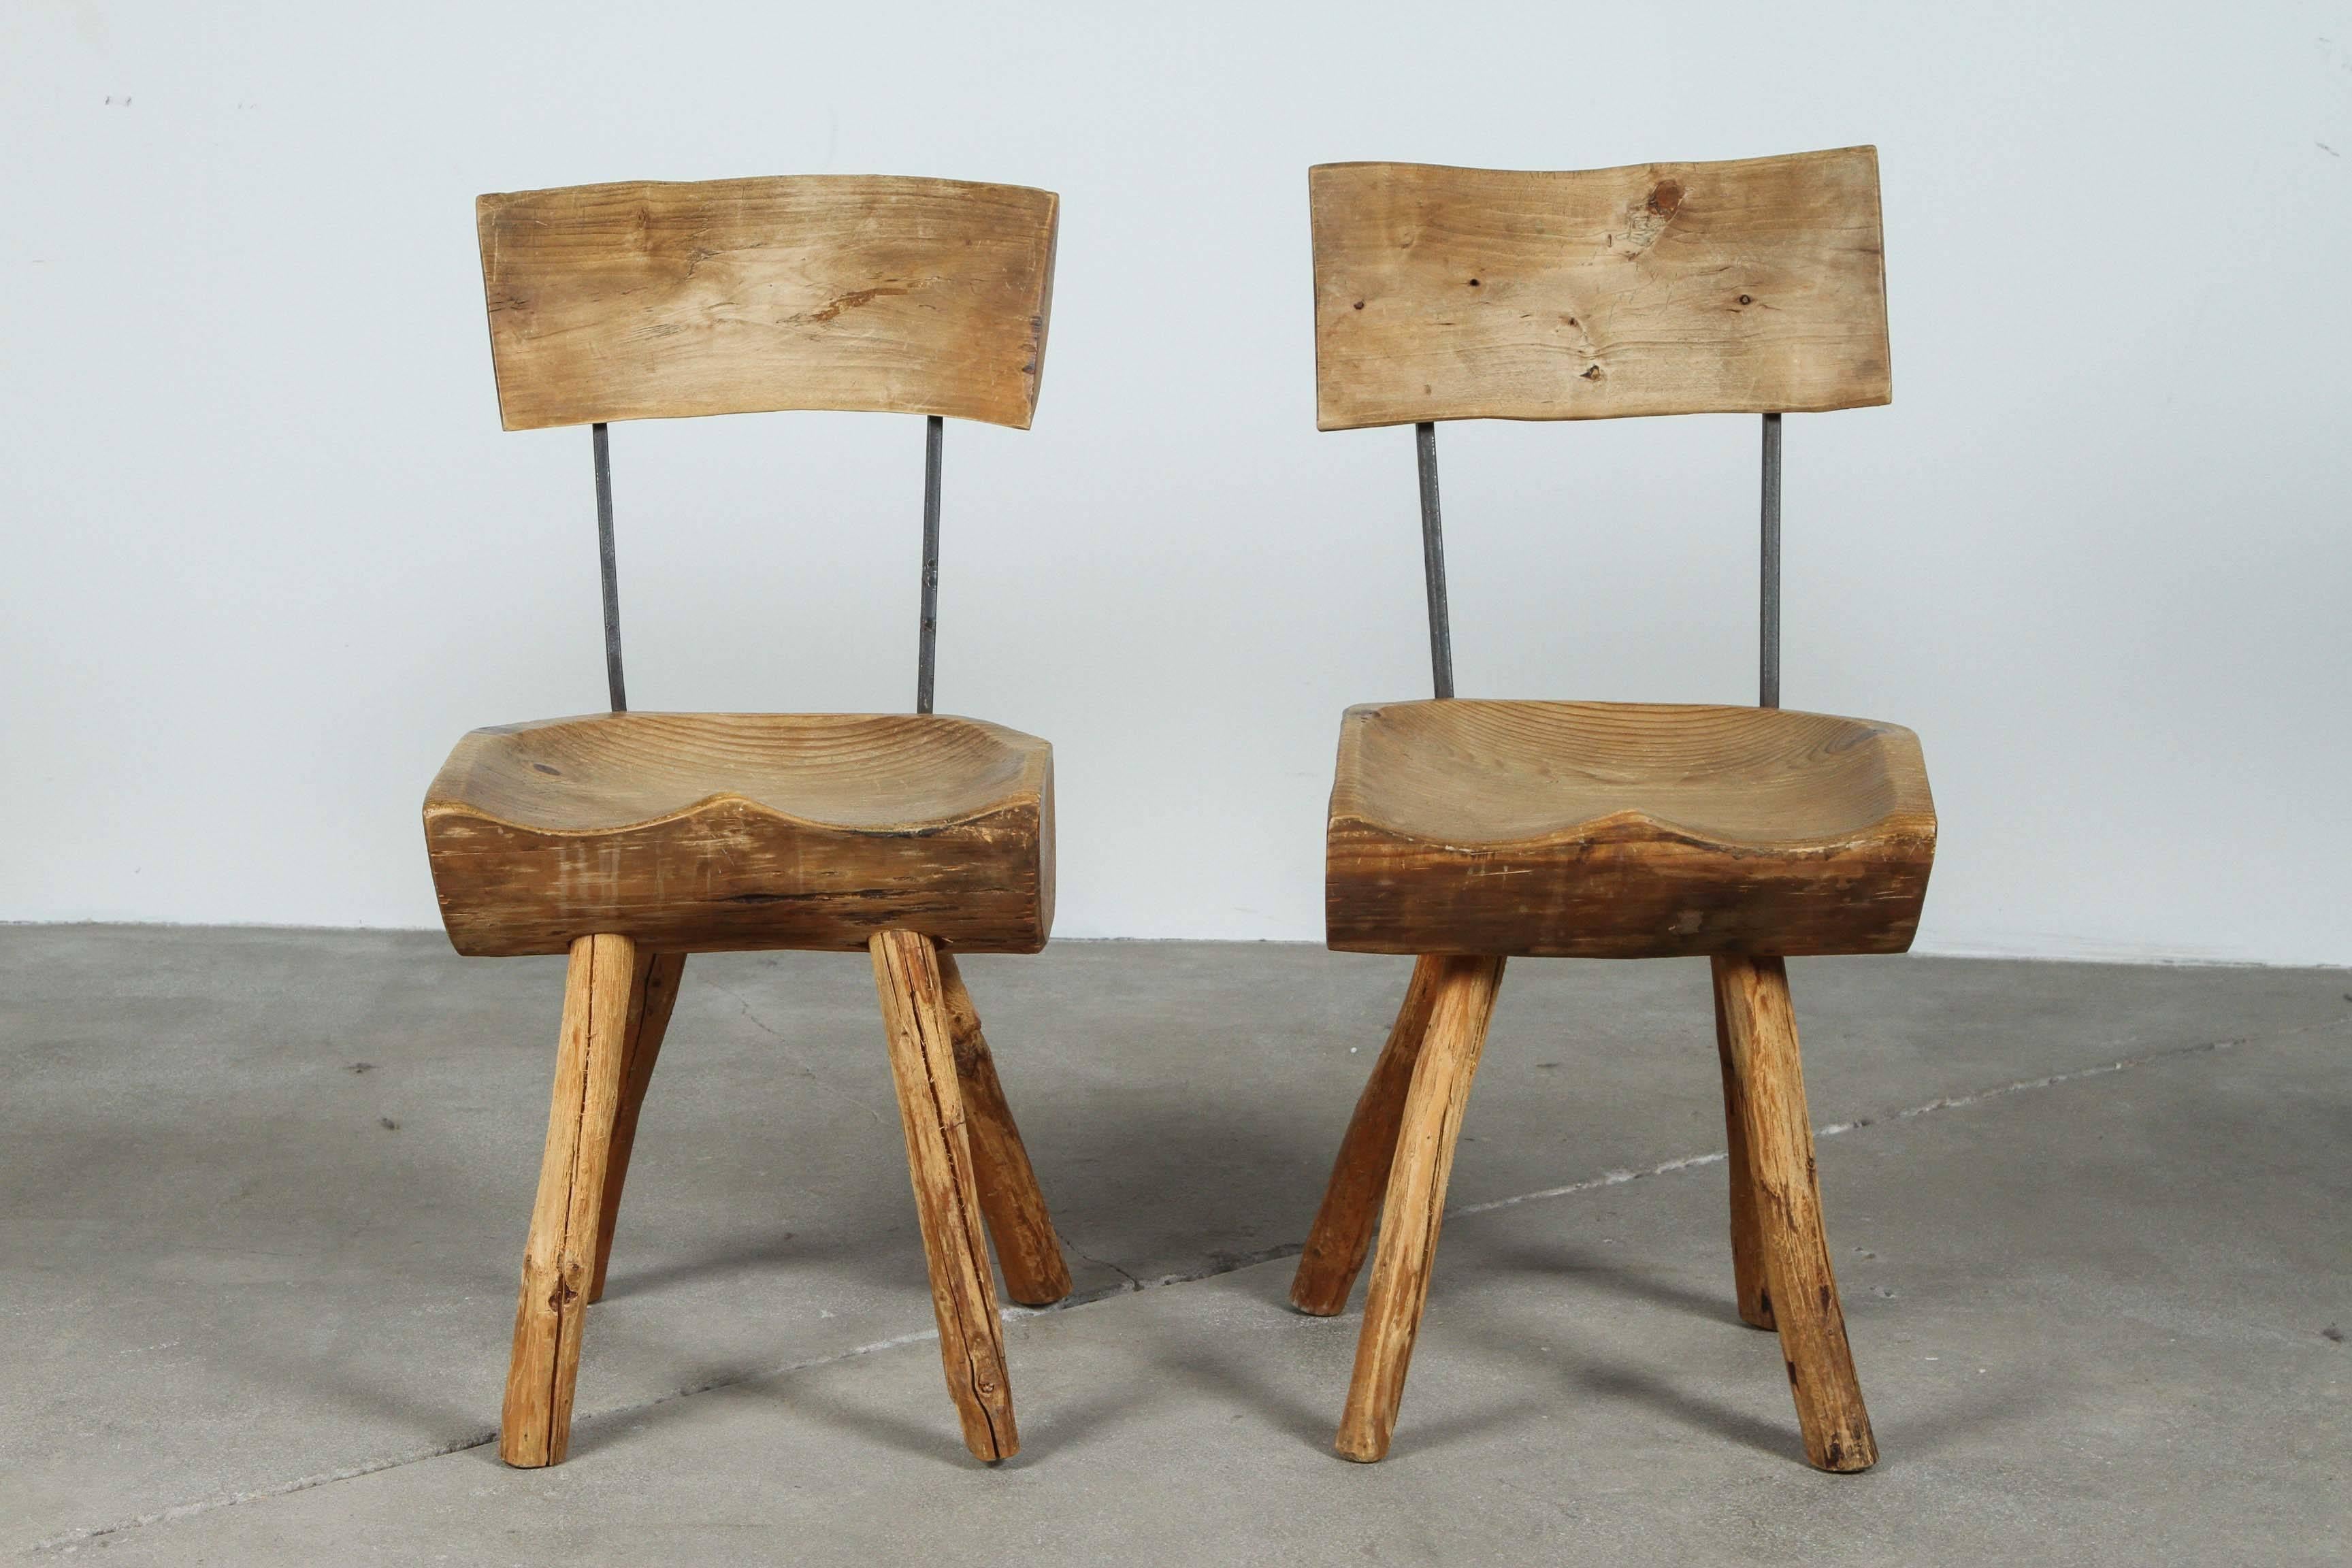 Primitive rustic log chairs.